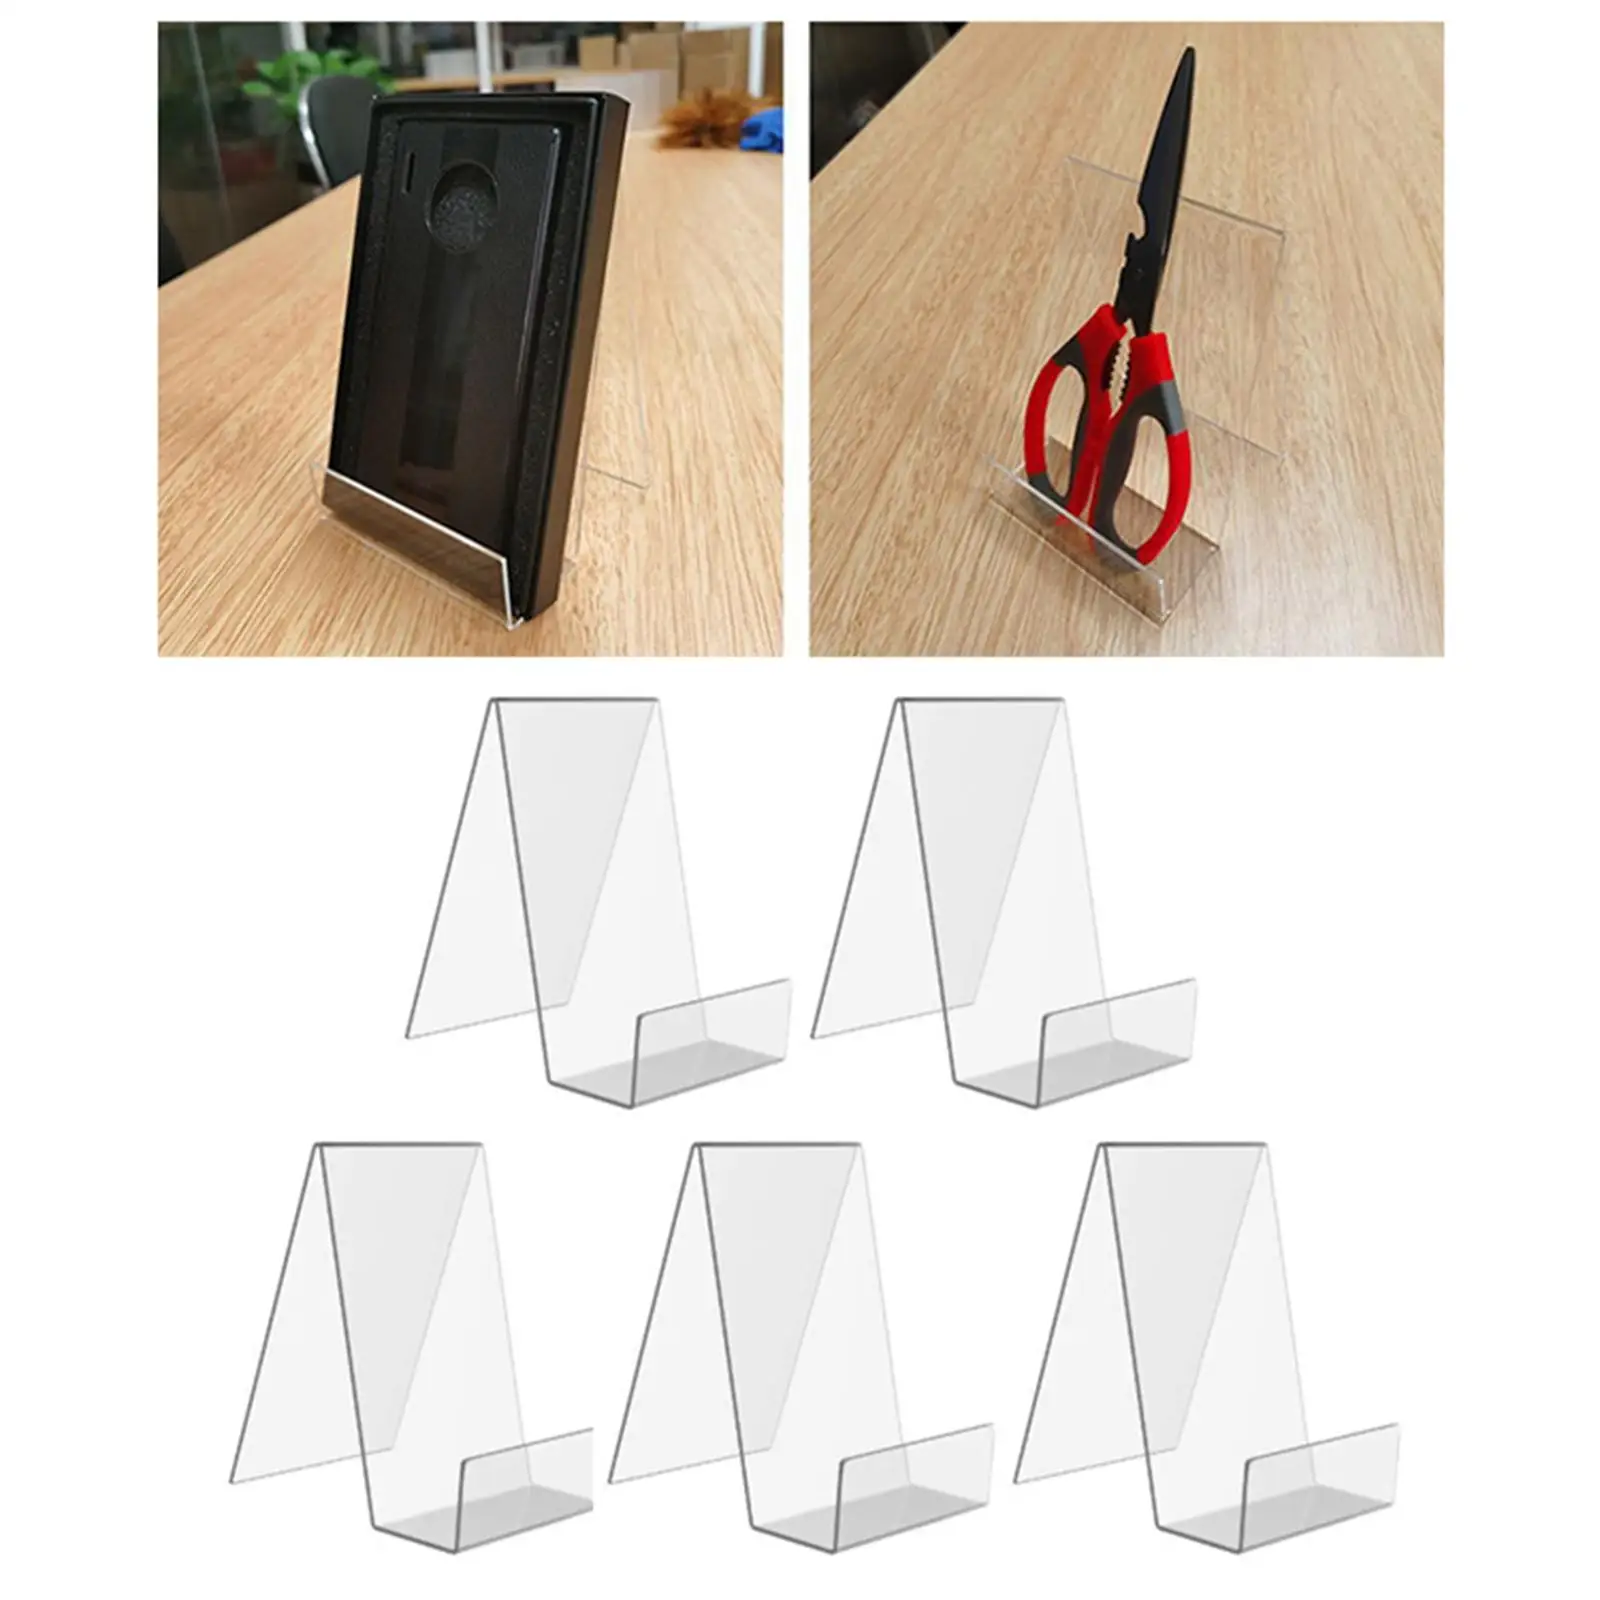 5Pcs  Acrylic Display Easel Literature Holder Shelf Book Plate Stand Desktop Magazine Shelves for , Home Office